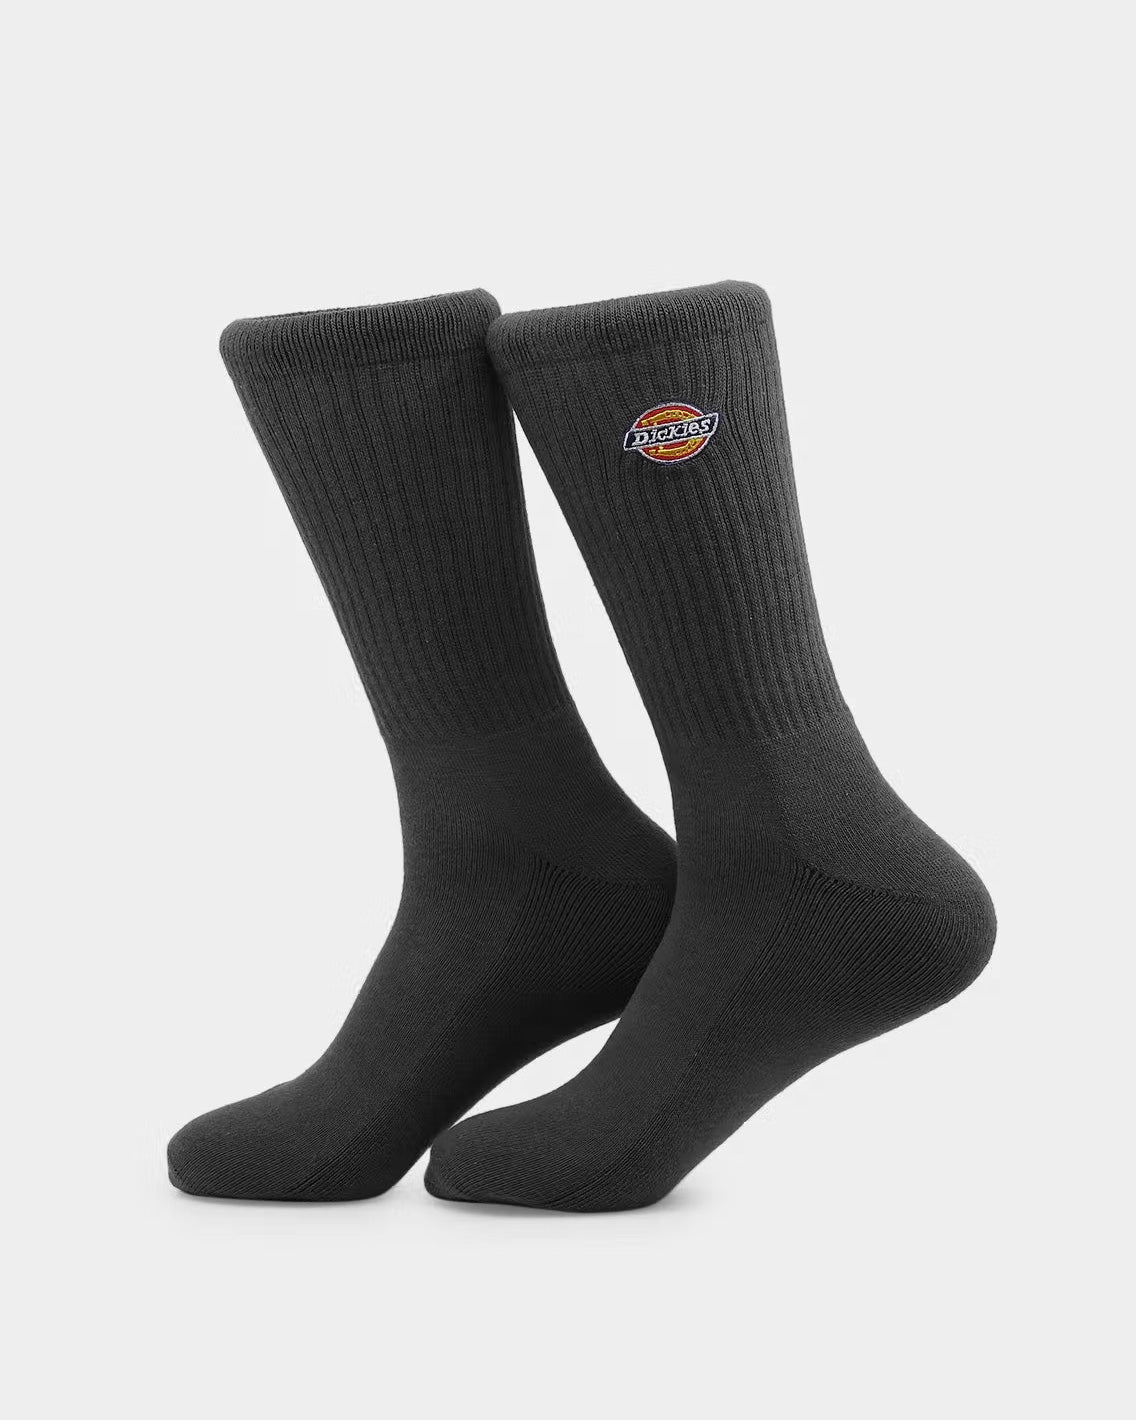 Dickies - H.S Rockwood 3PK Socks - Black / White / Grey